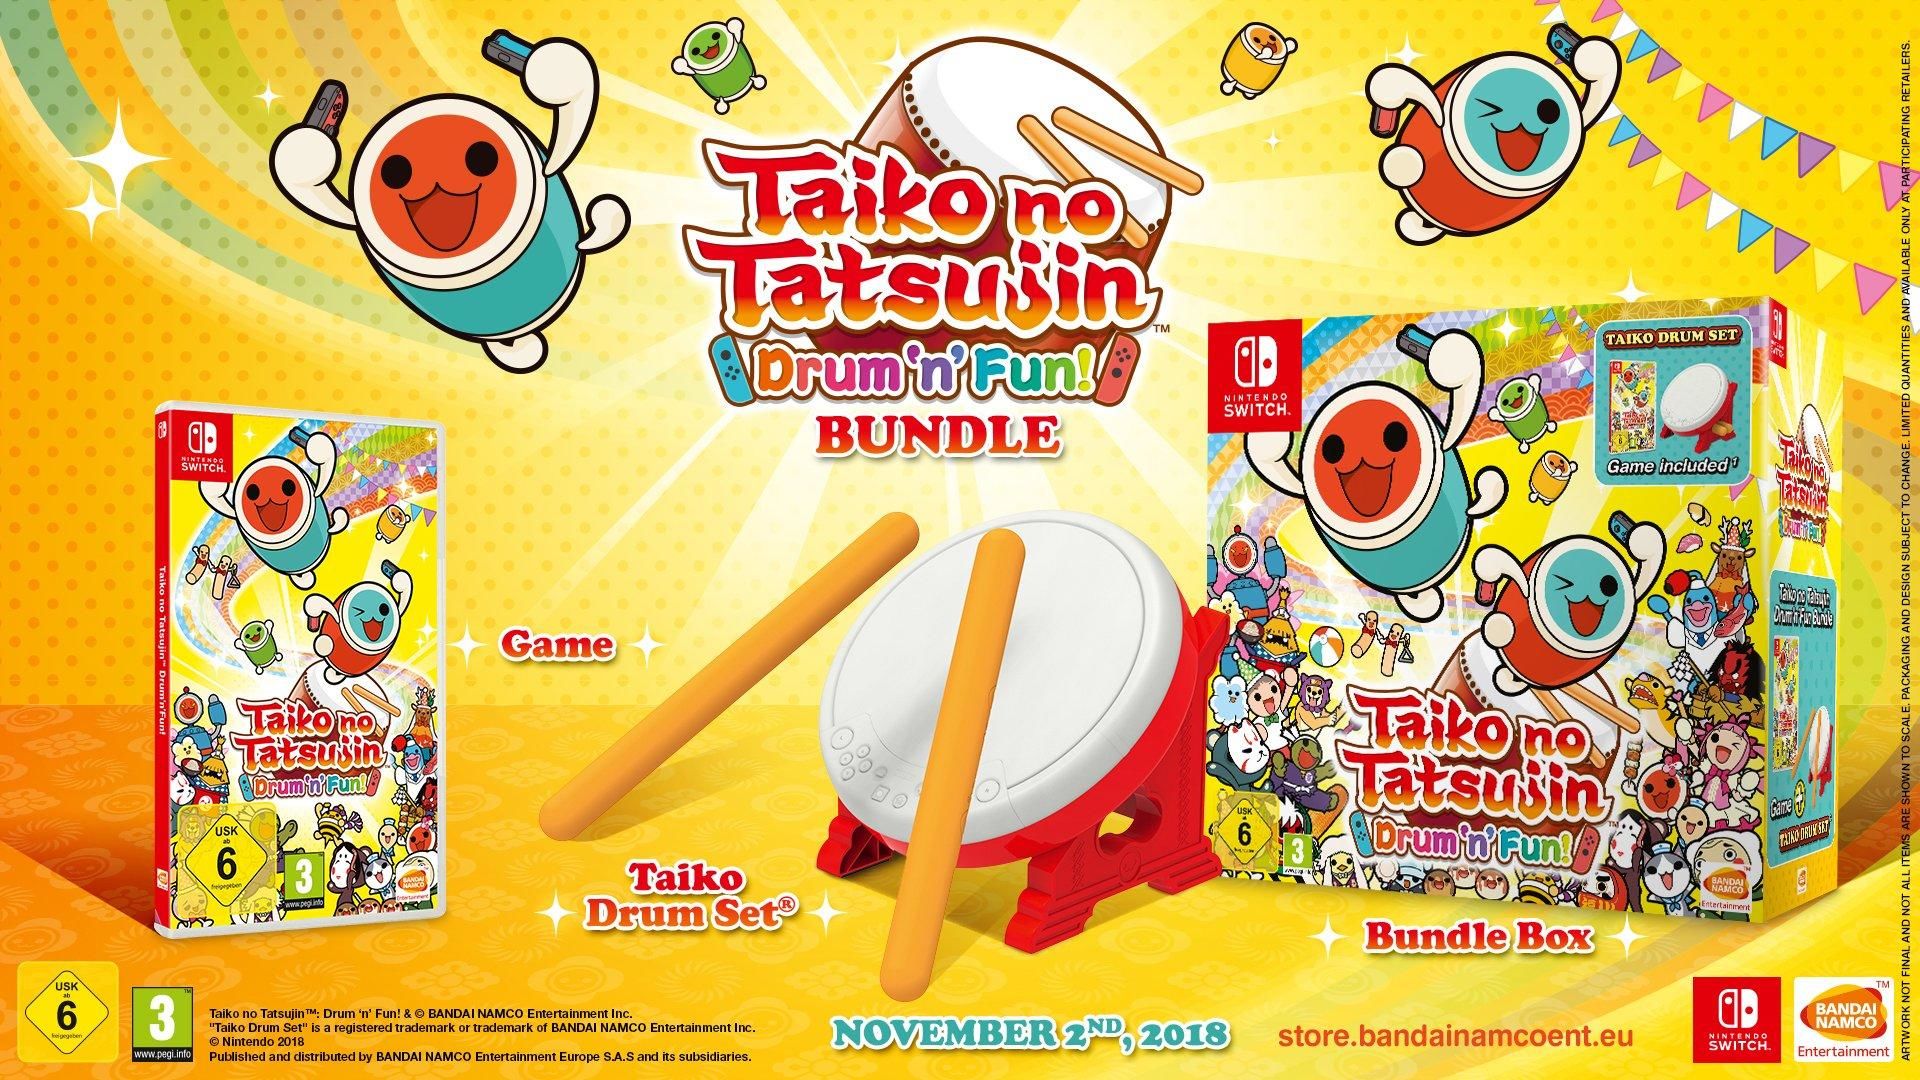 Taiko no Tatsujin: Drum‘n’ Fun! Bundle